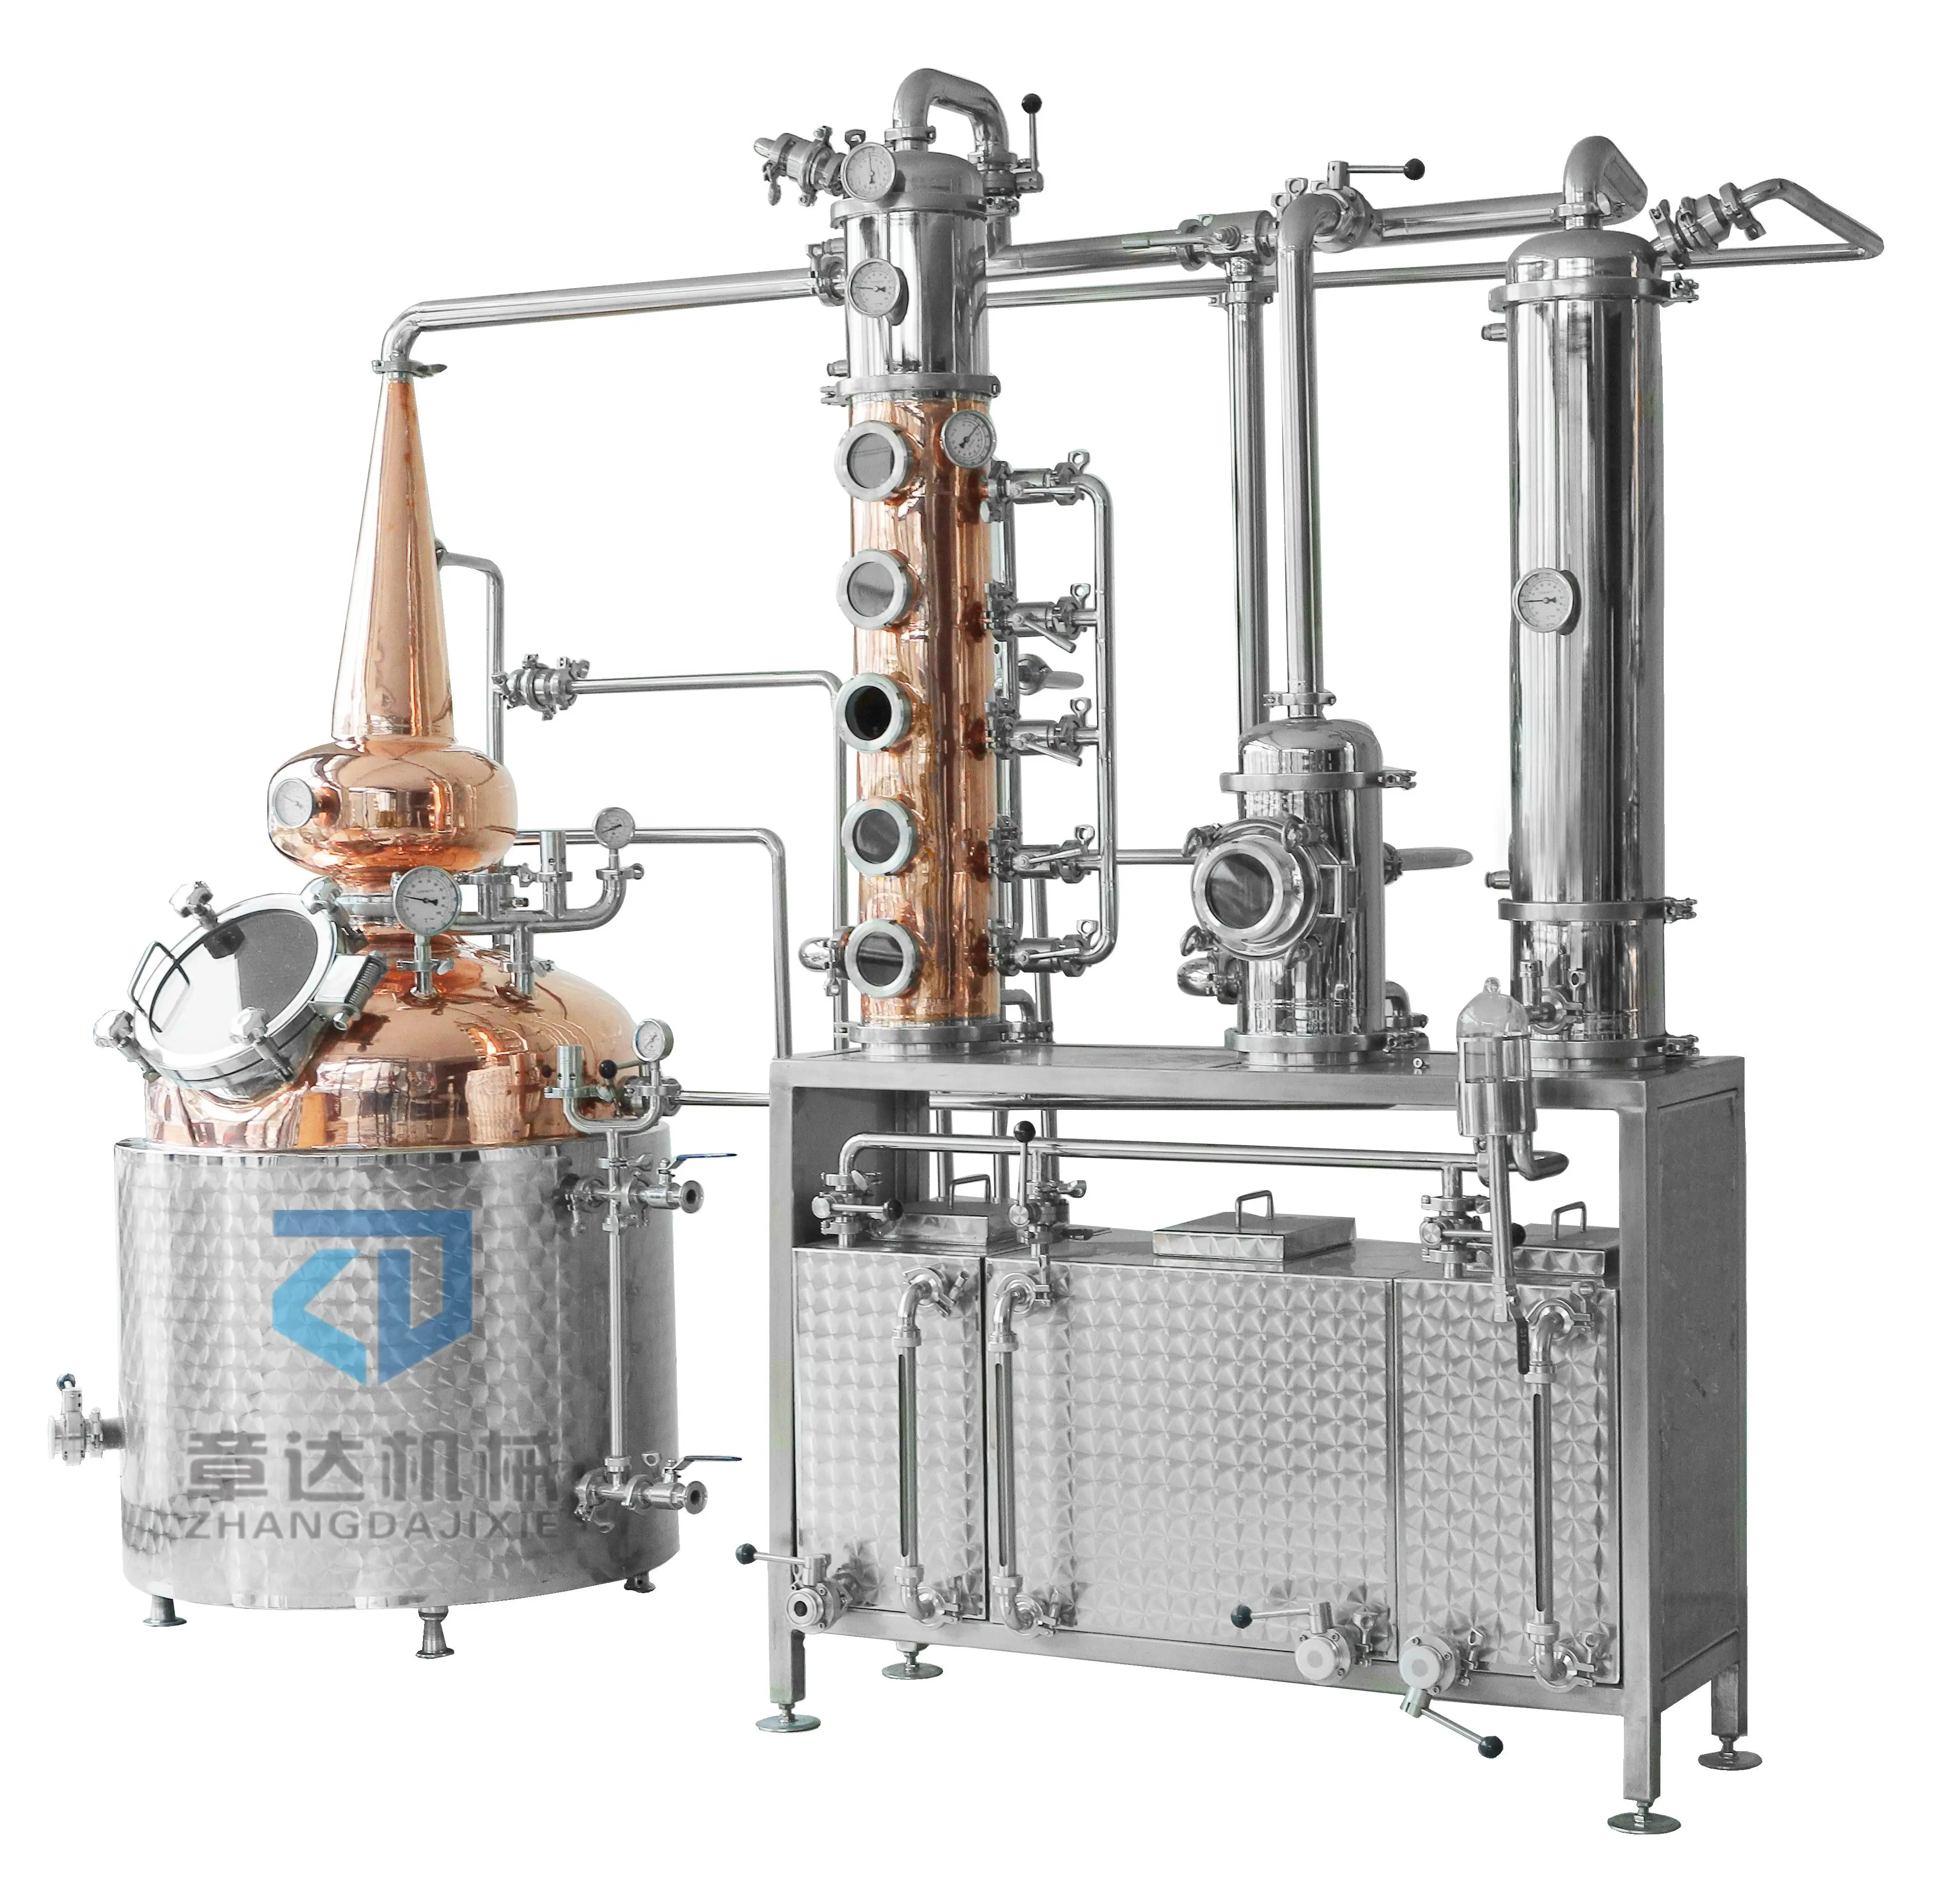 gin distiller whisky distiller with distillation column 500l copper distilling equipment for ethanol